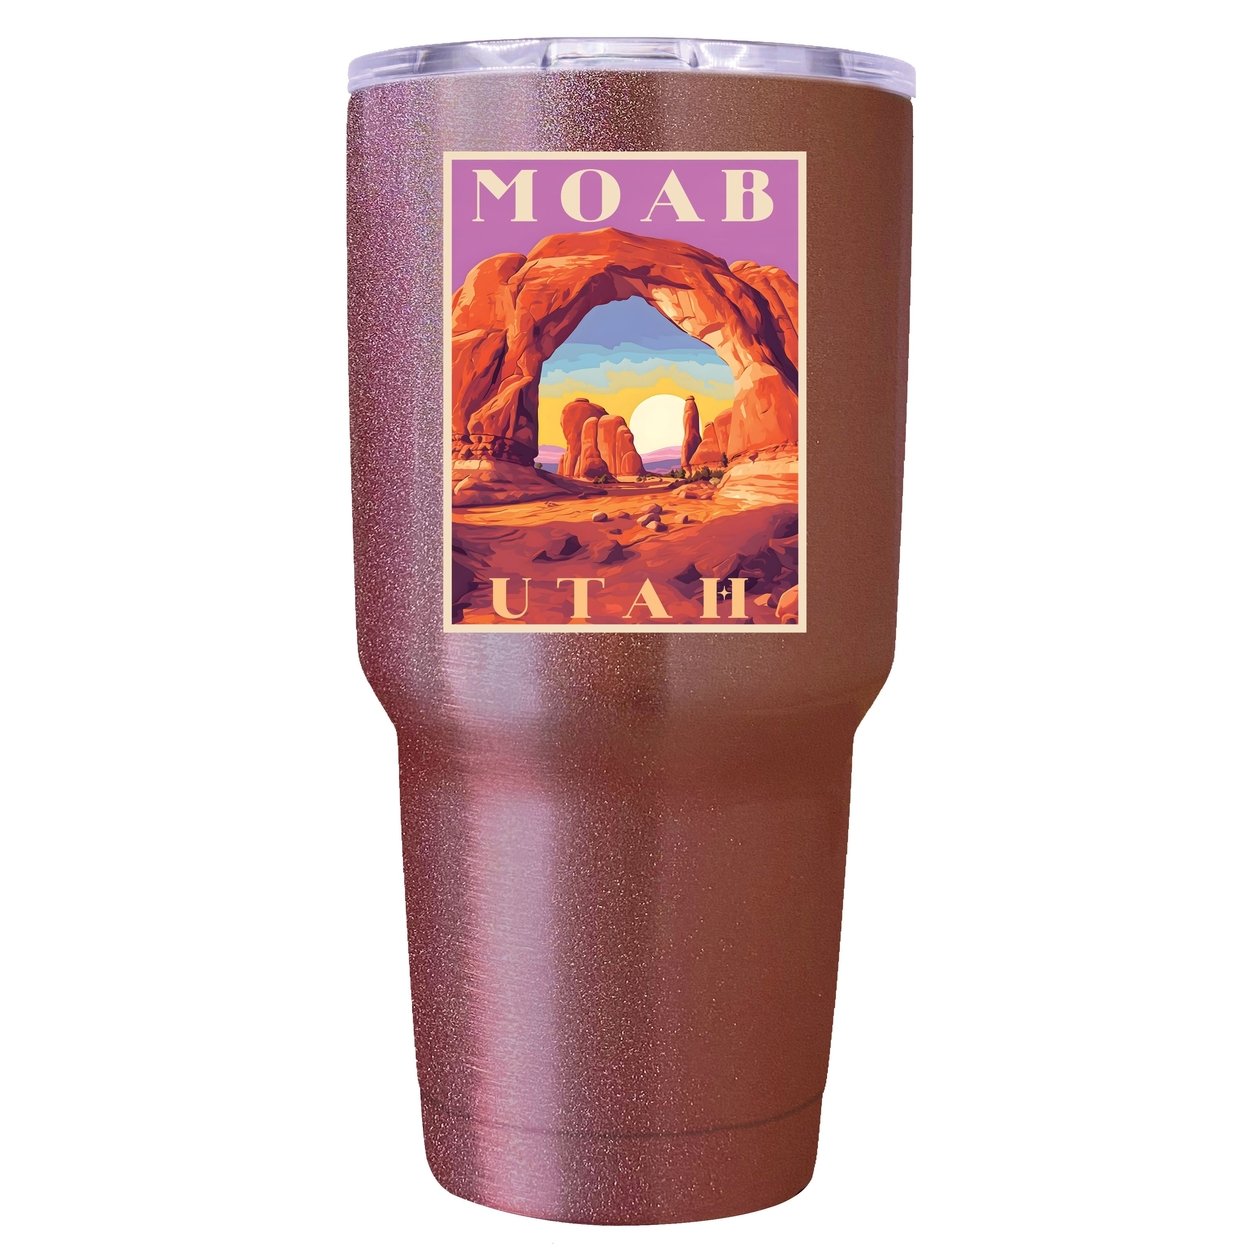 Moab Utah Souvenir 24 Oz Insulated Stainless Steel Tumbler - Rose Gold,,Single